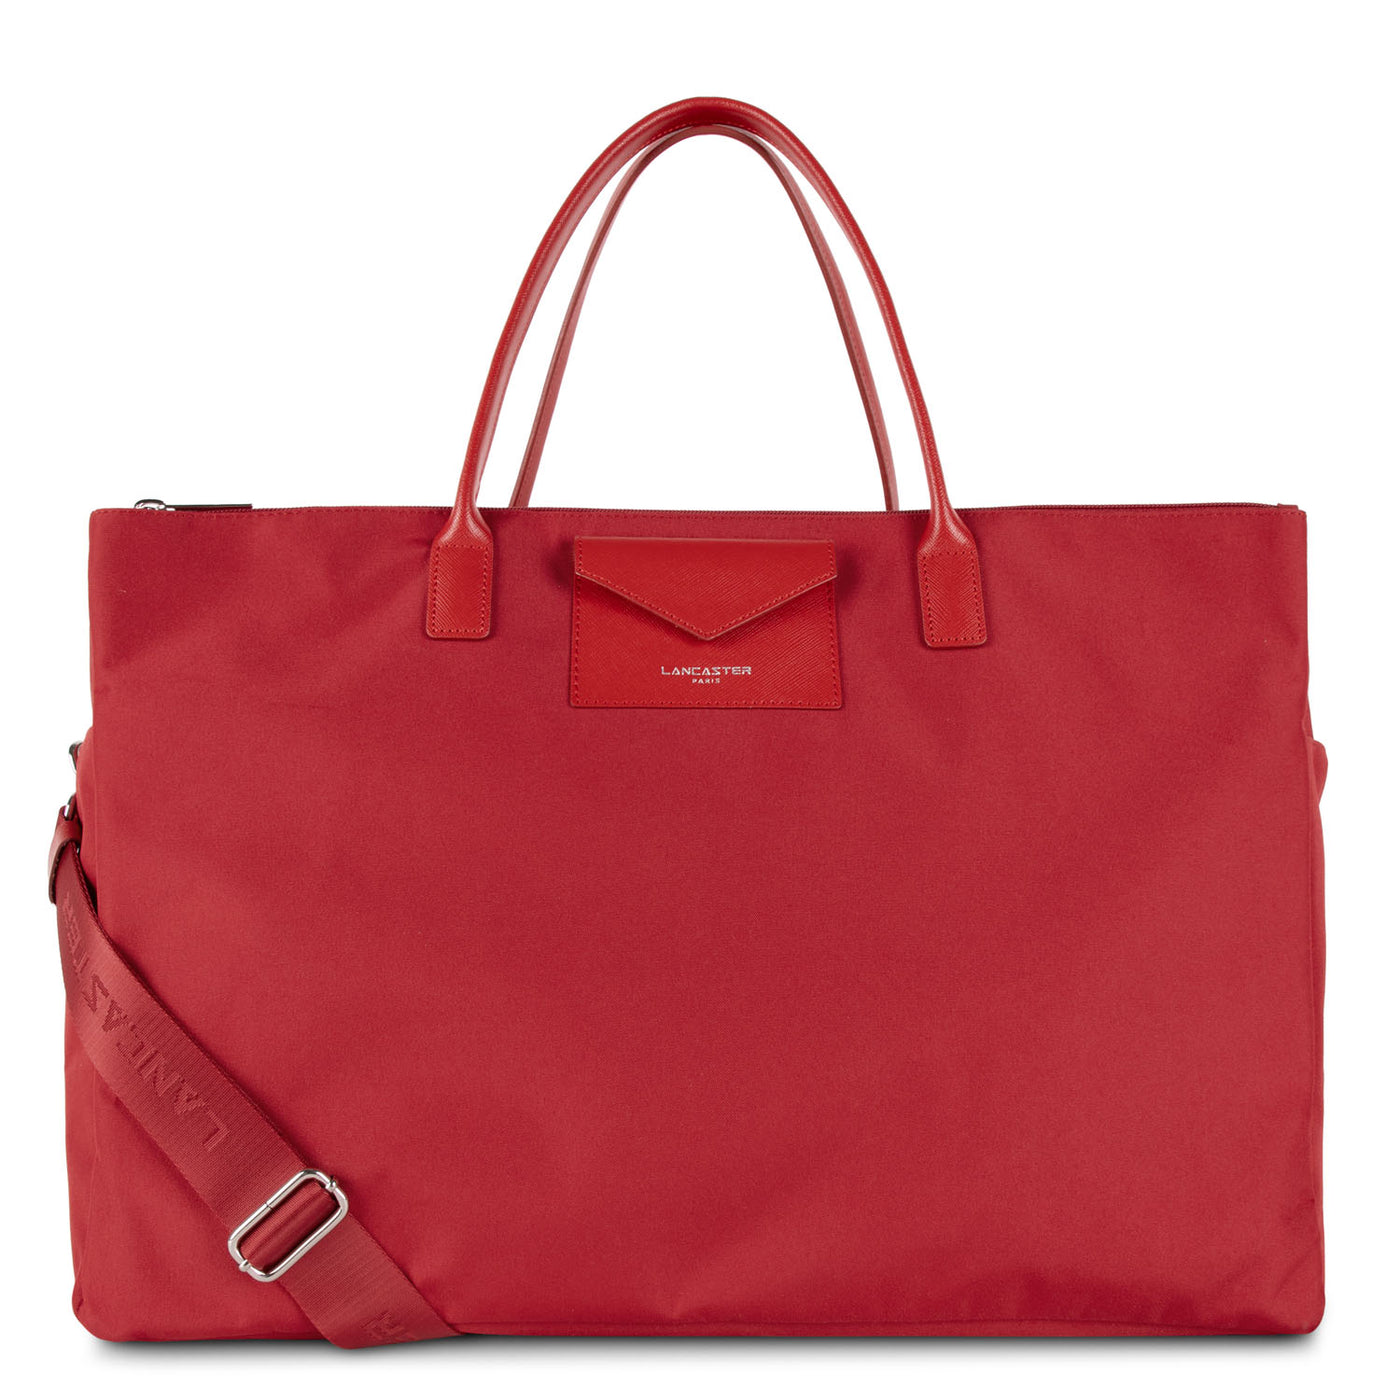 sac voyage - smart kba #couleur_rouge